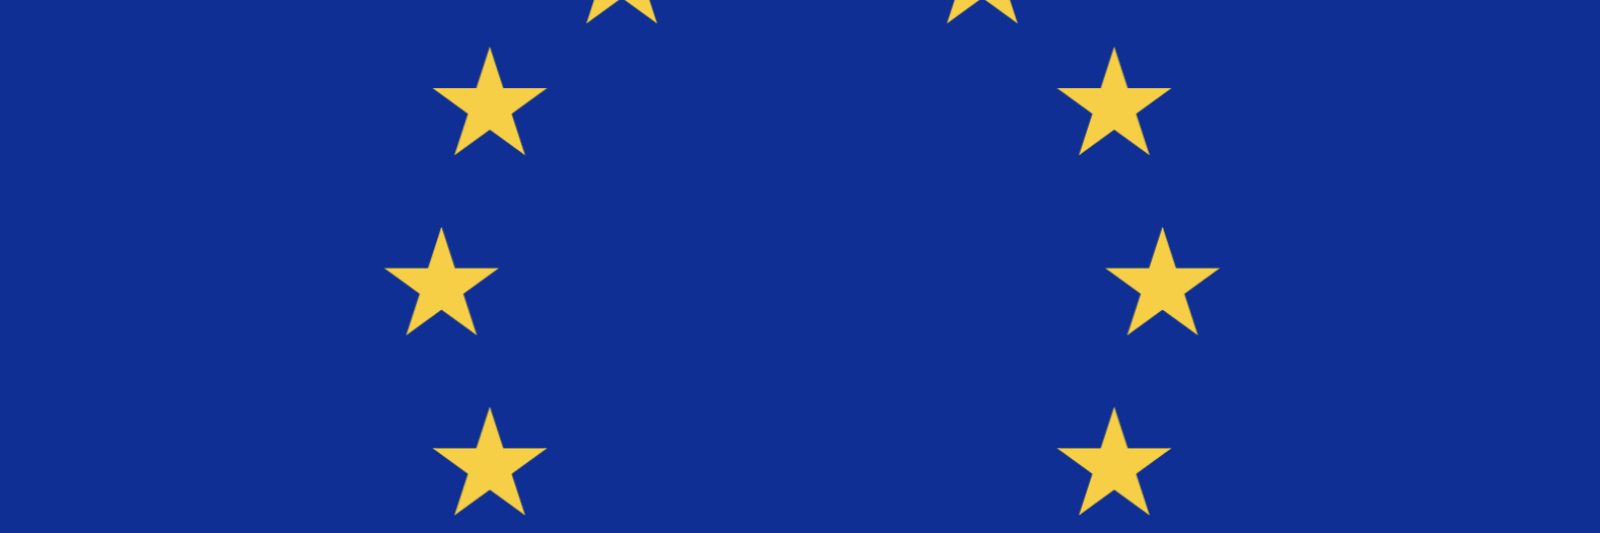 Bandiera europea